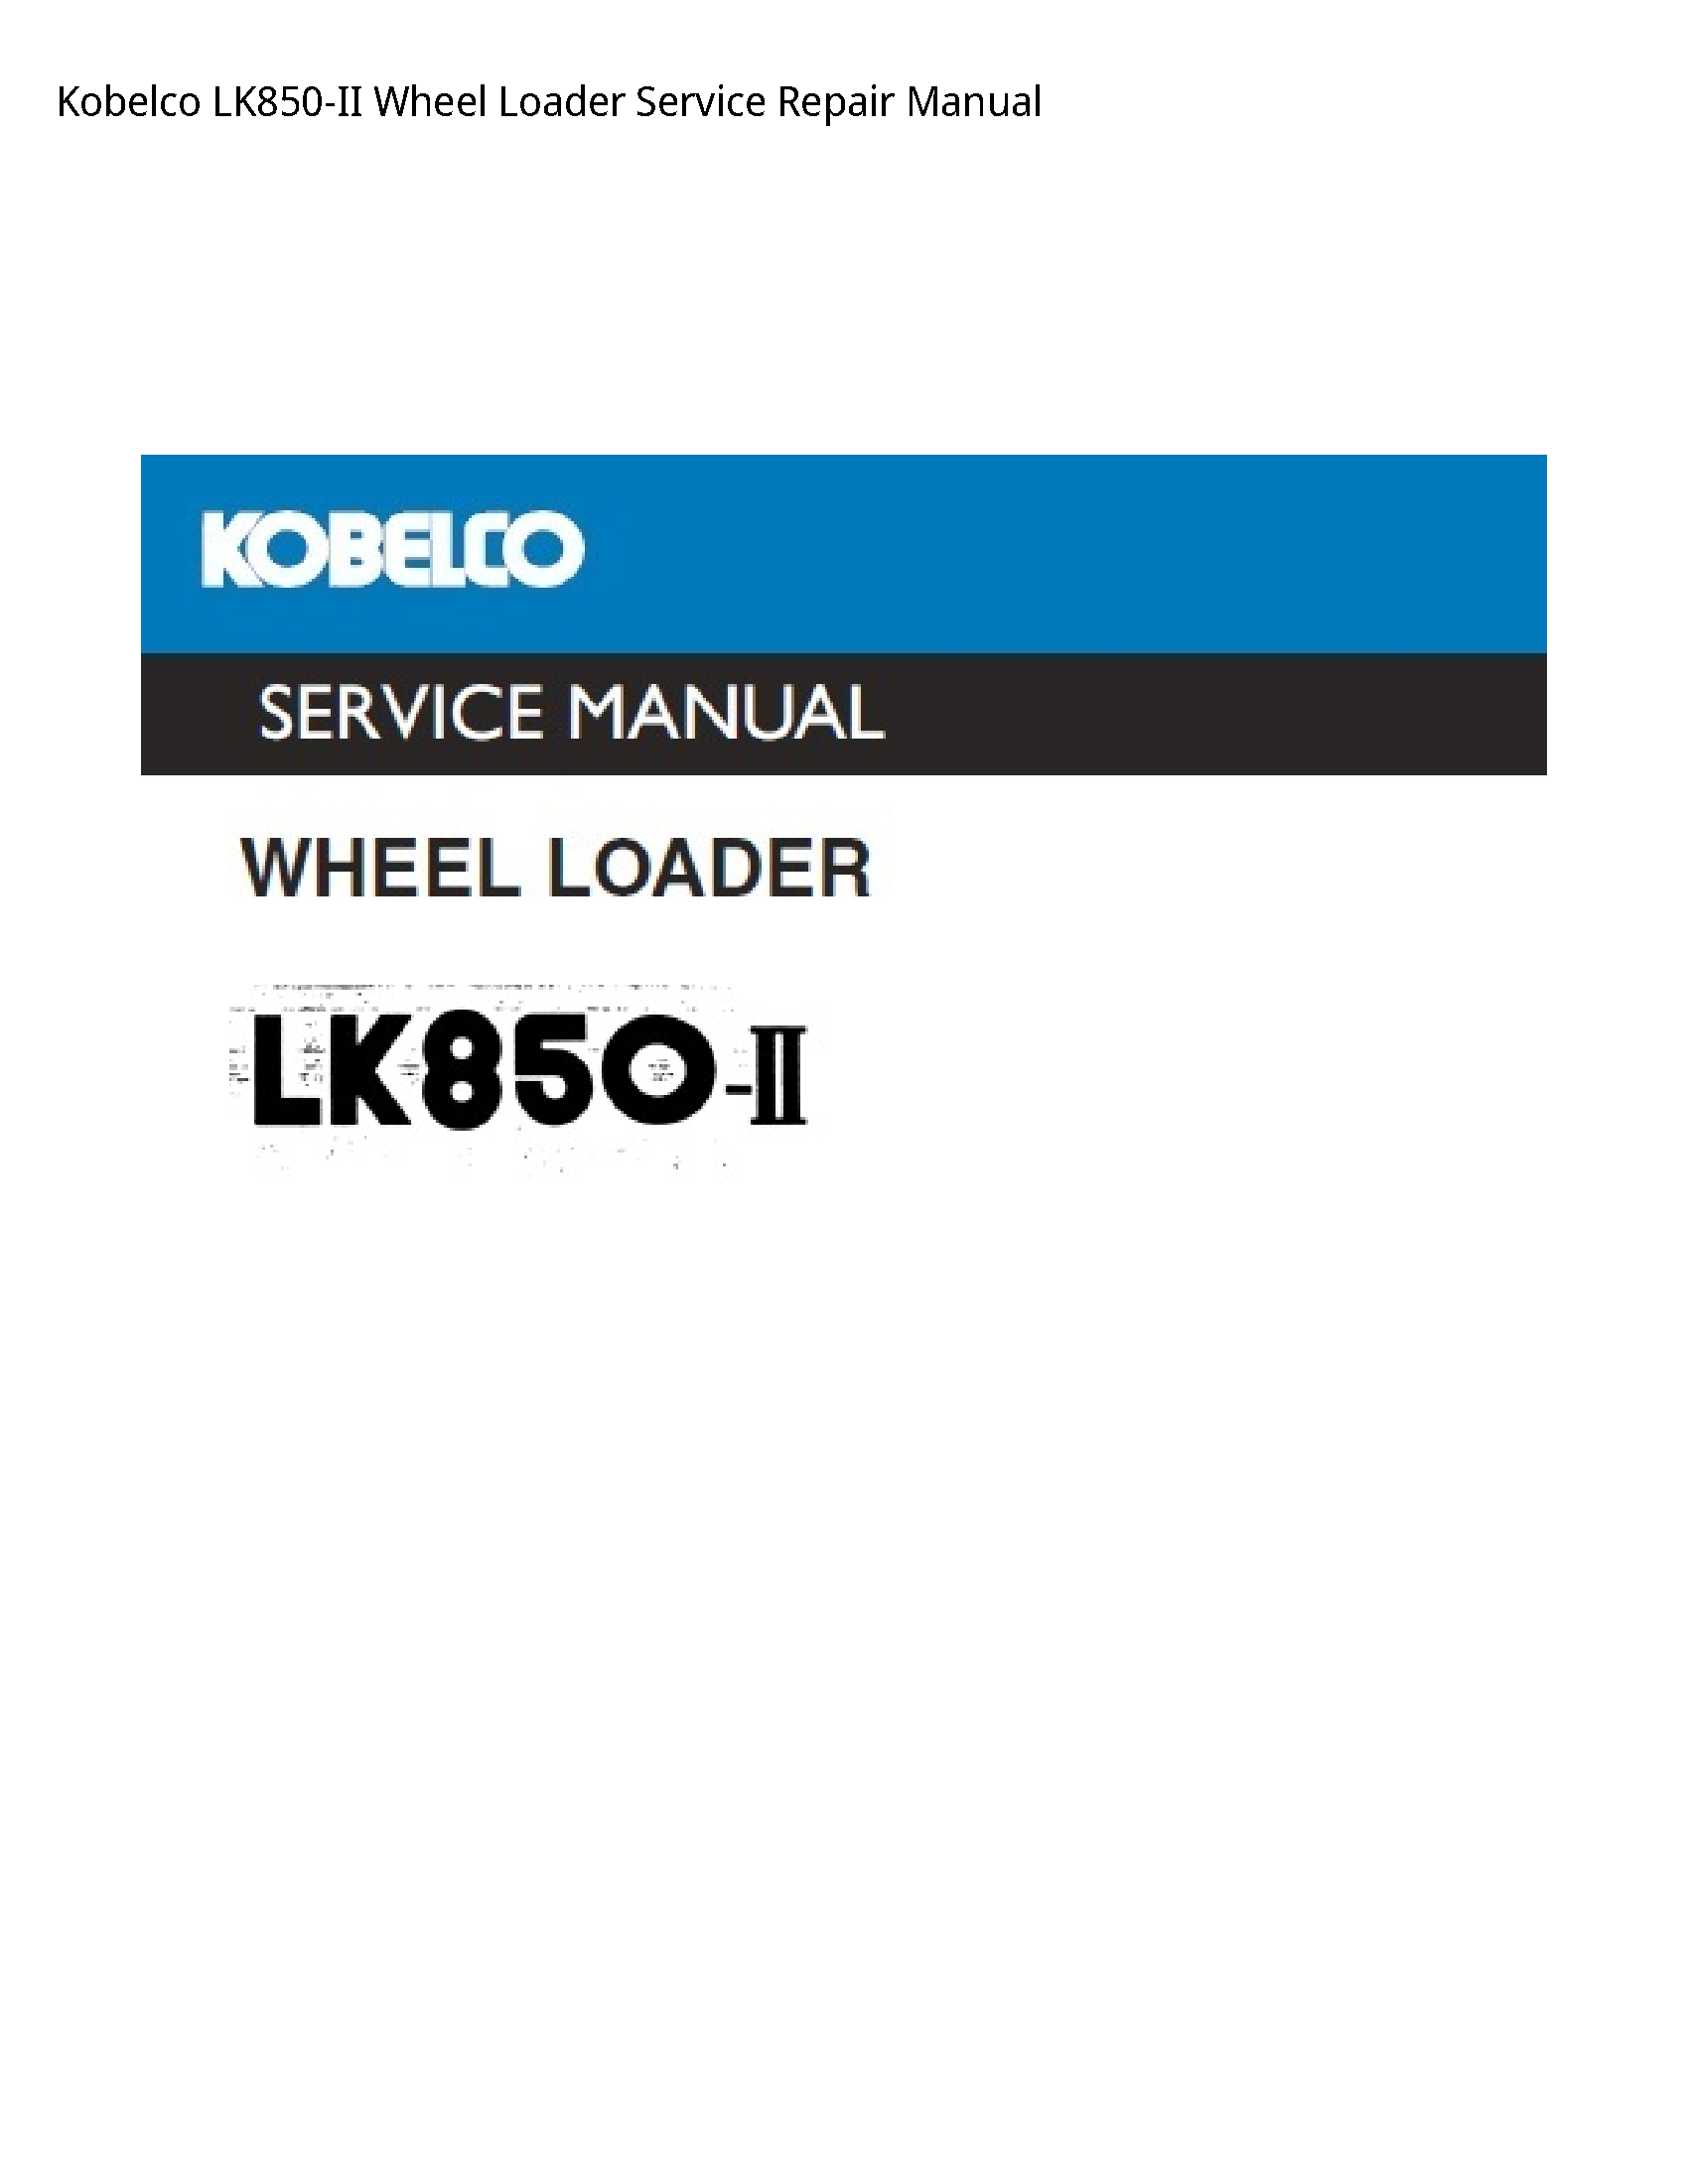 Kobelco LK850-II Wheel Loader manual